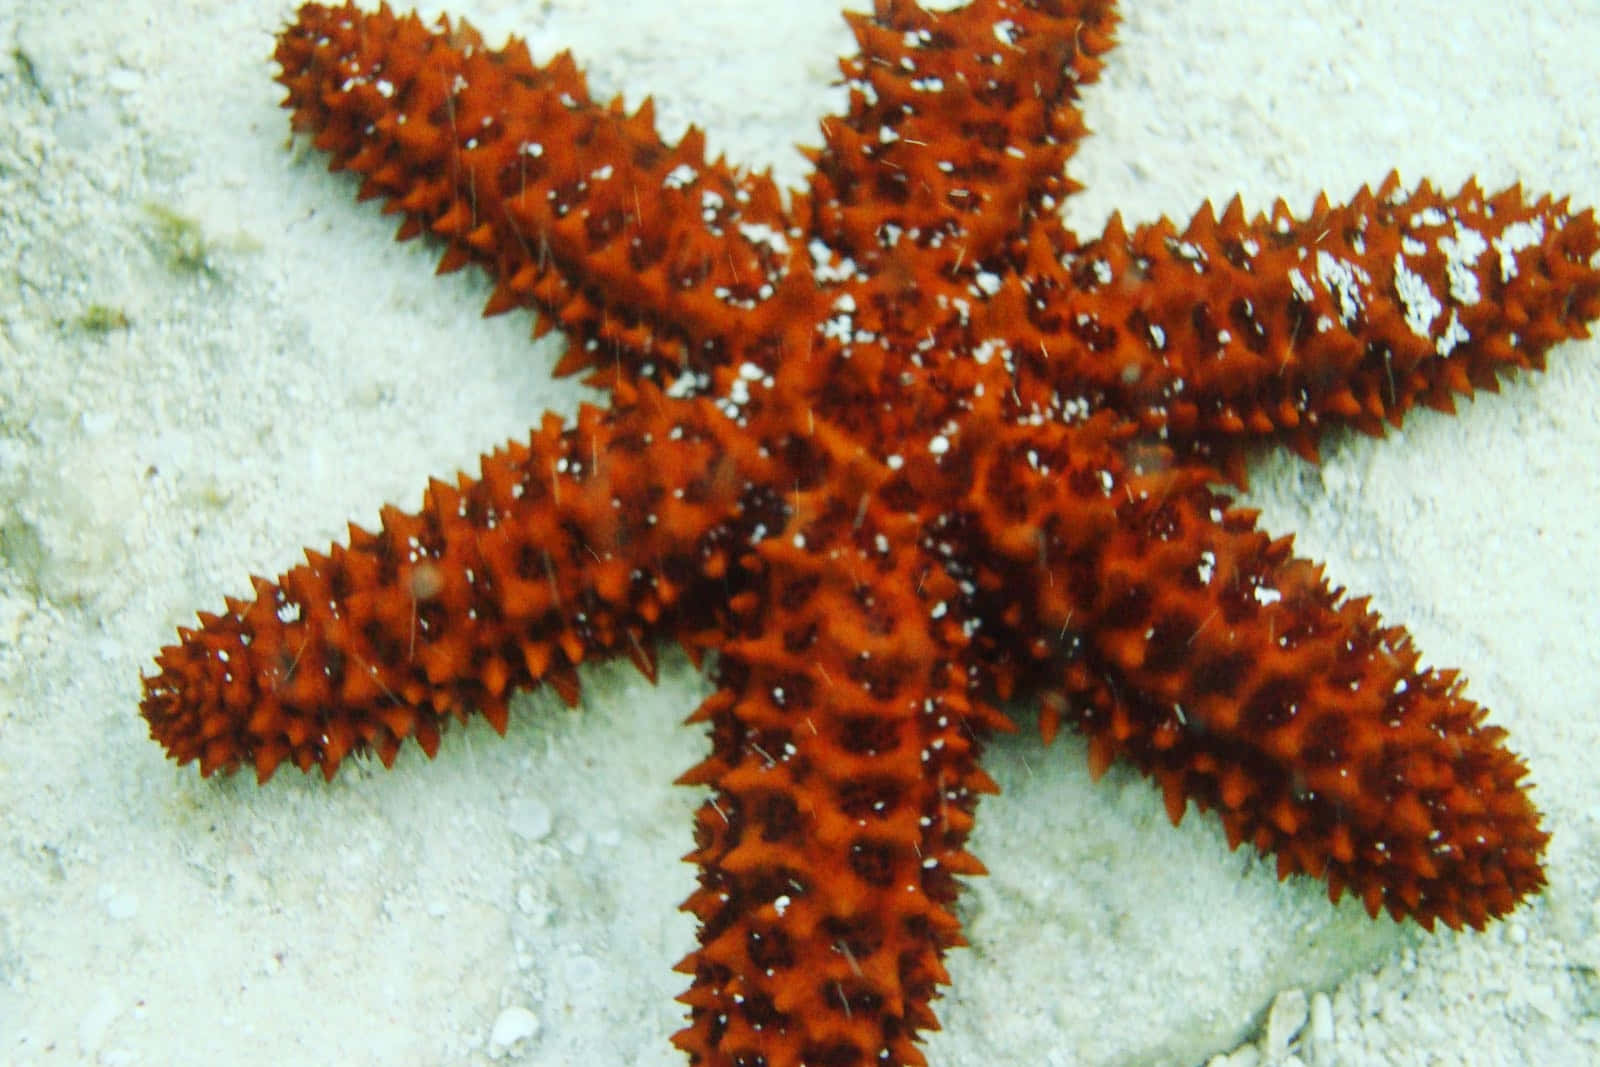 Caption: Echinoderm Starfish On Ocean Bed Wallpaper